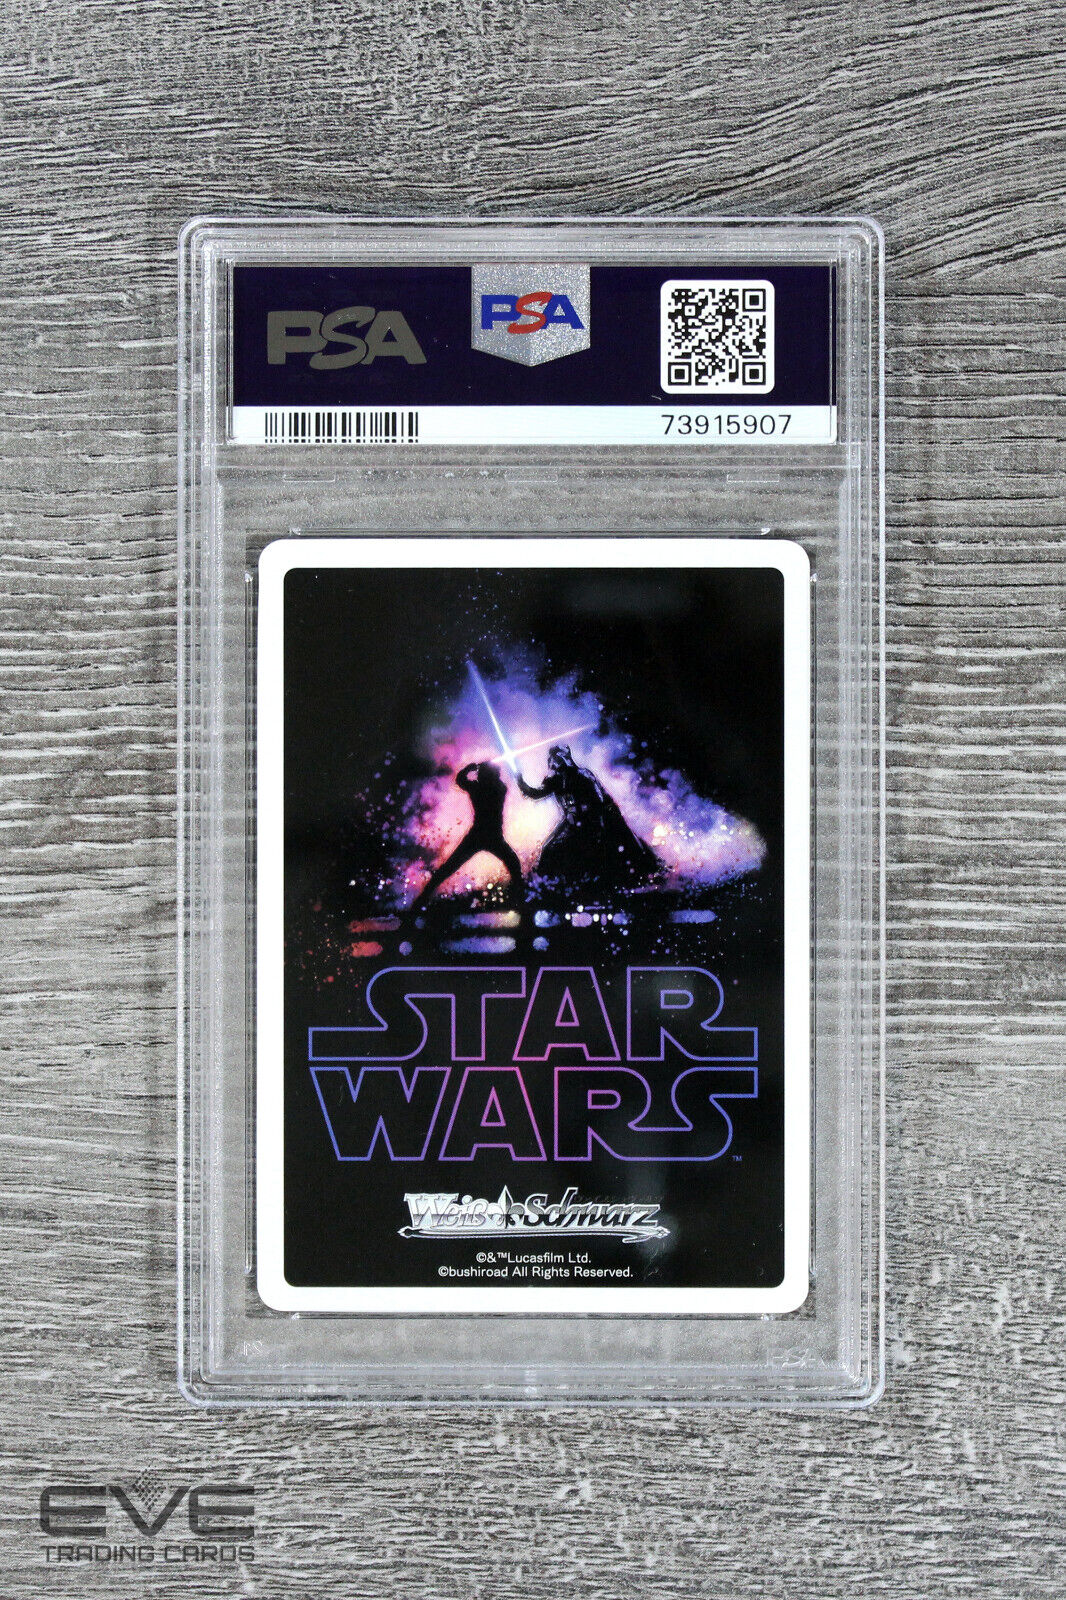 2022 Weiss Schwarz Japanese Star Wars Card Boushh Leia SW/S49-035 RR - PSA 10